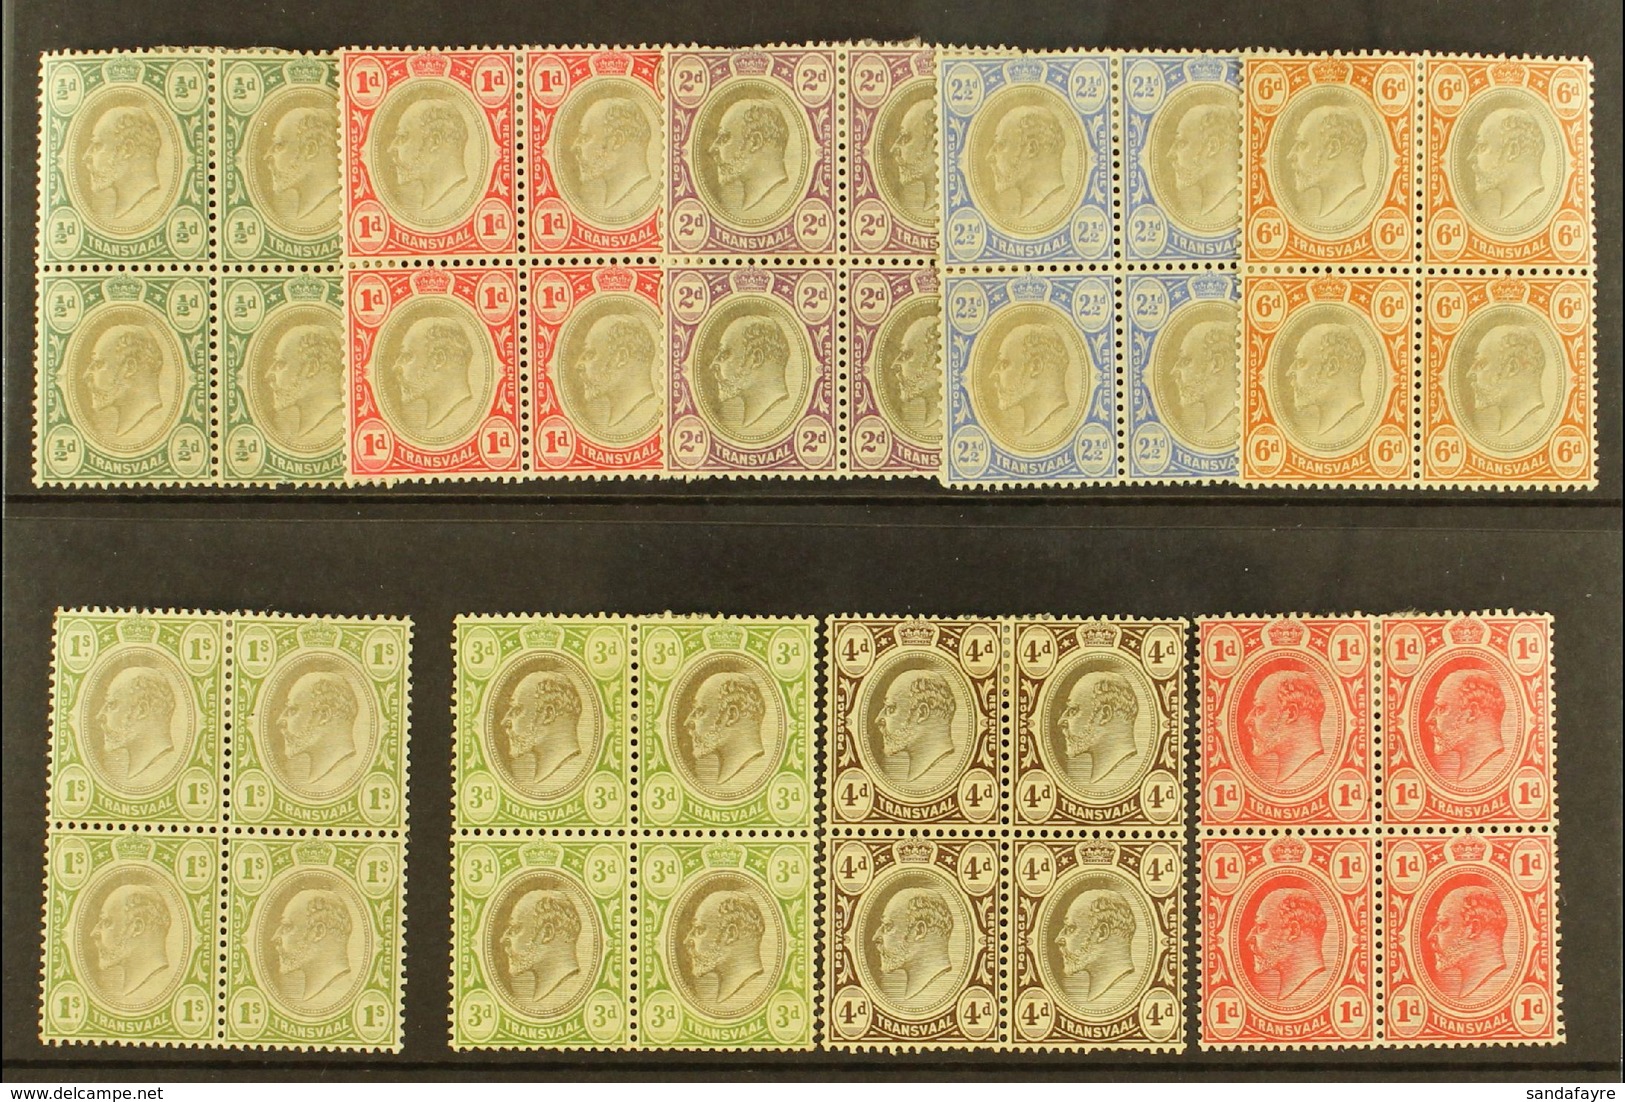 TRANSVAAL 1902-09 Group Of Mint Blocks Of 4, Incl. Wmk Crown CA ½d To 2½d, 6d & 1s, Wmk Mult Crown CA 3d & 4d And 1905-0 - Unclassified